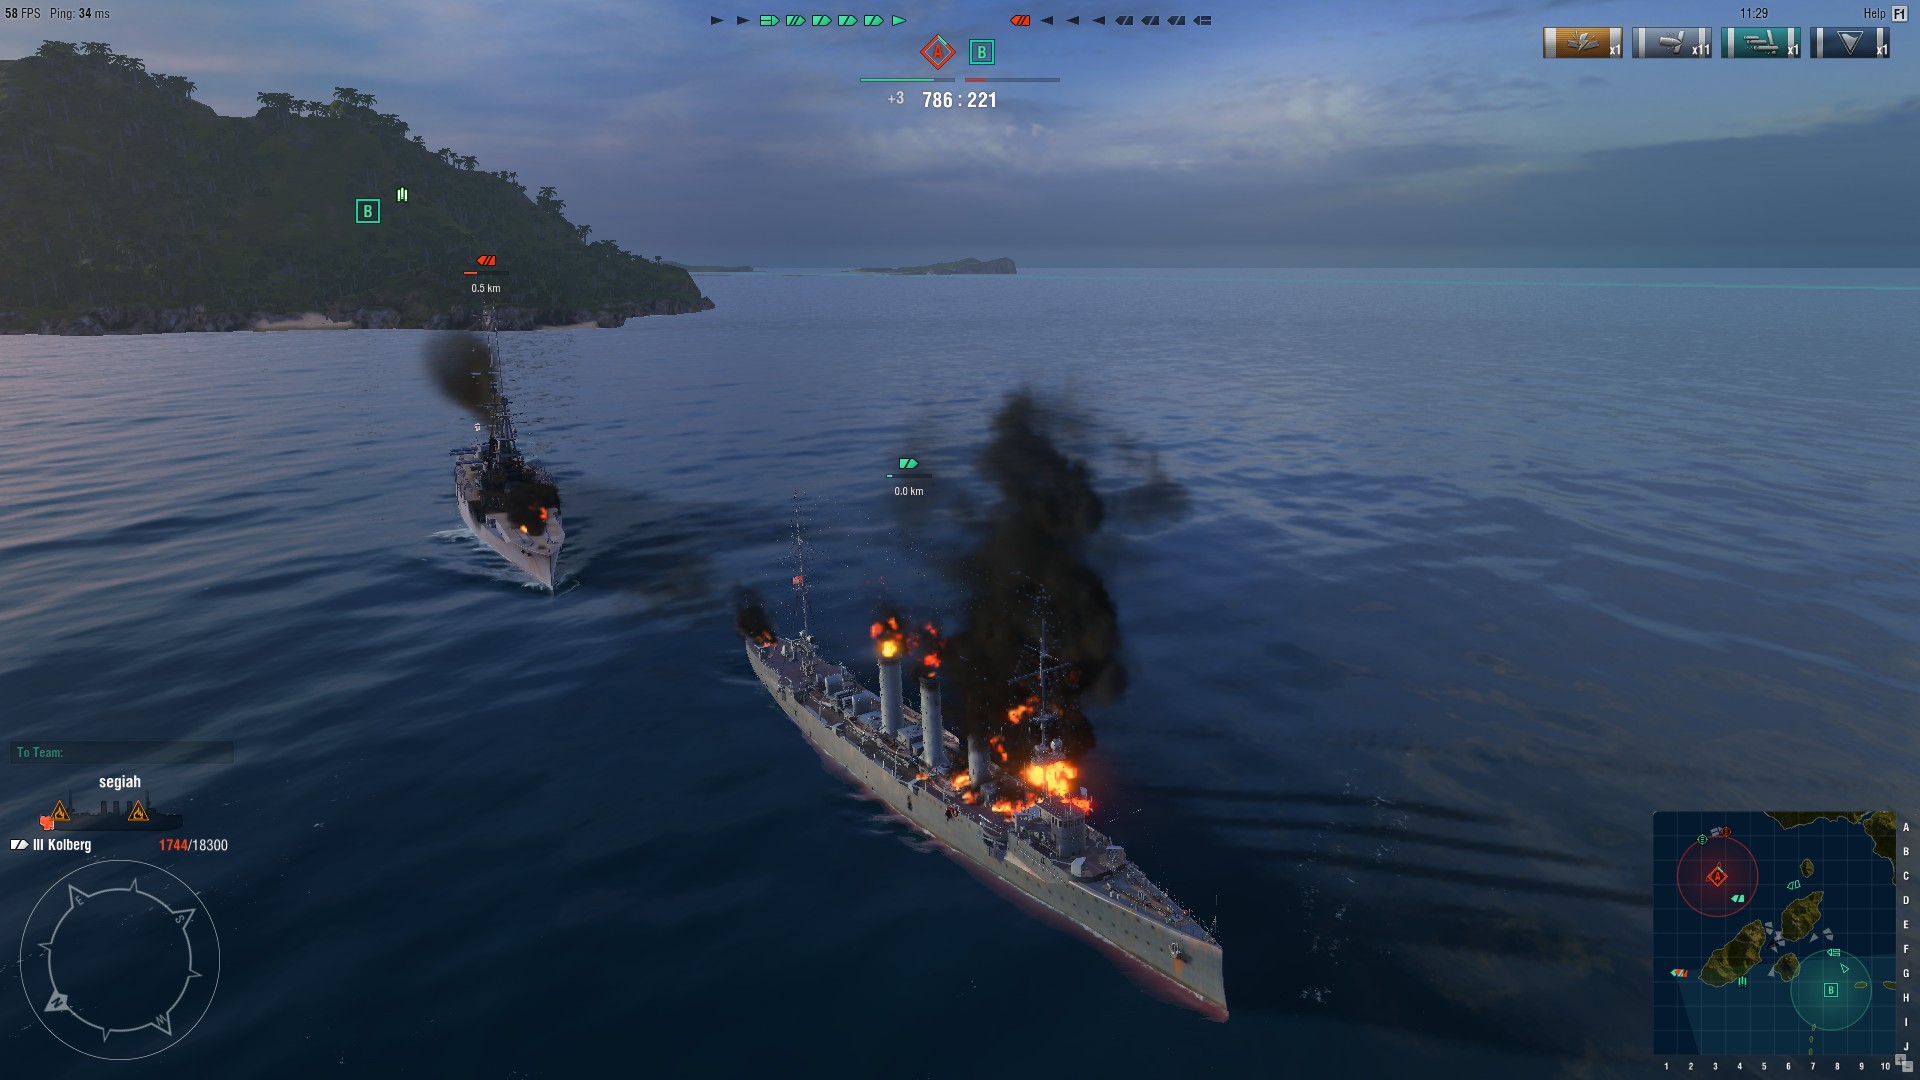 force anti-aliasing world of warships